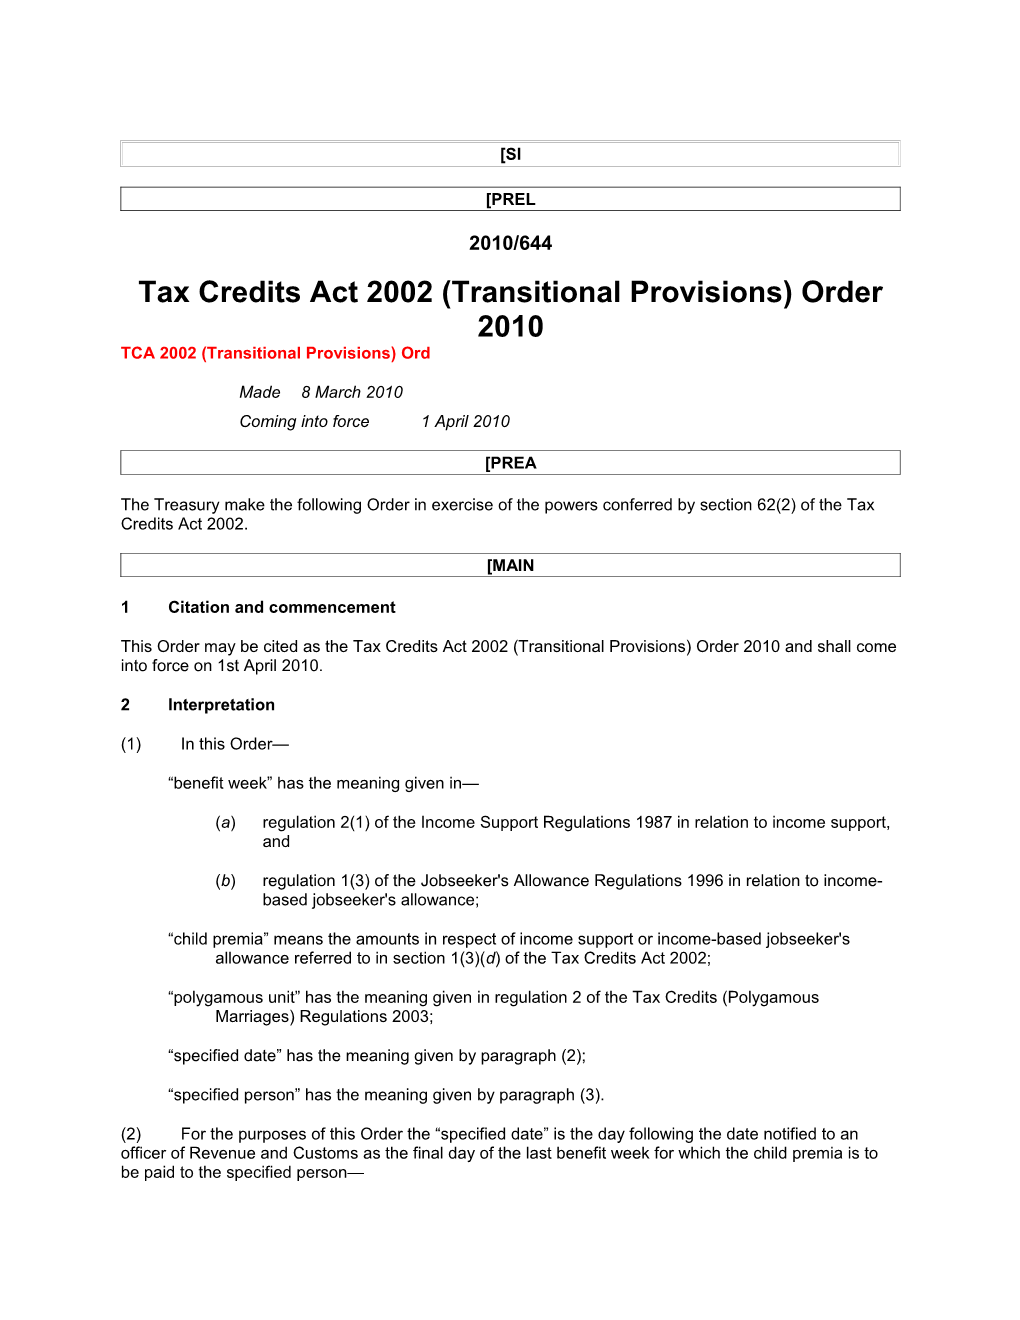 Tax Credits Act 2002 (Transitional Provisions) Order 2010